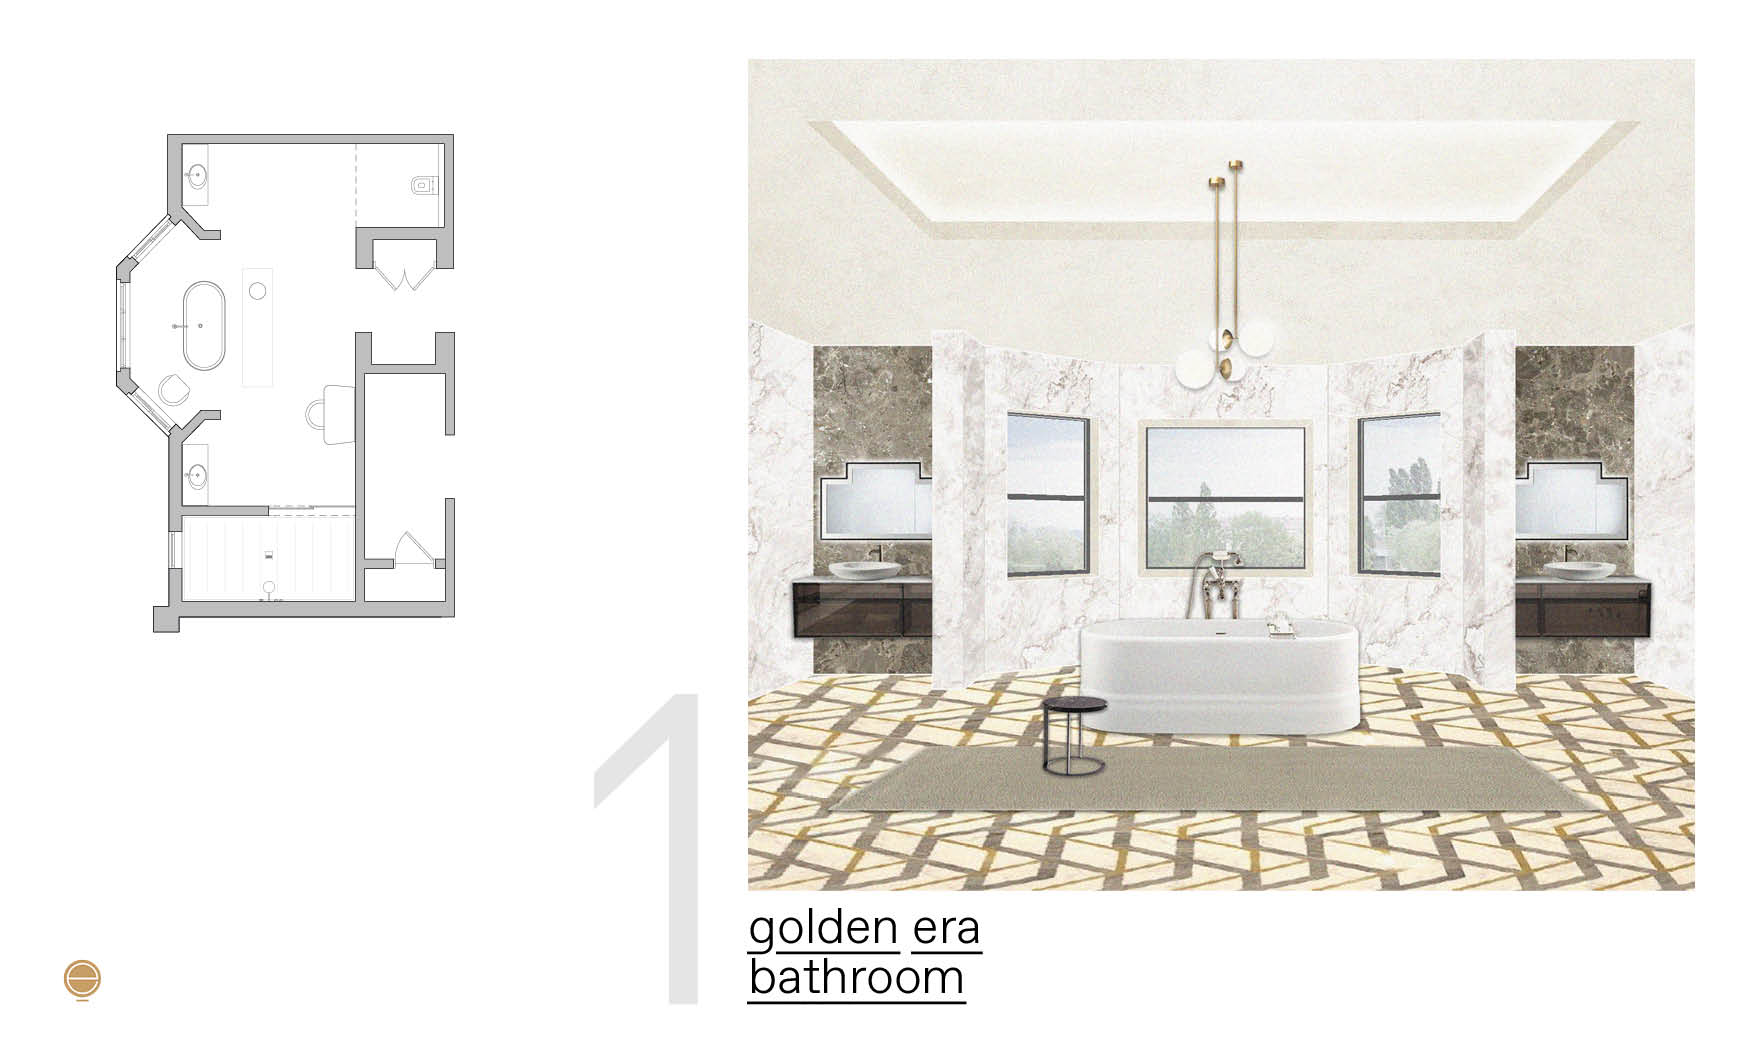 golden era luxury bathroom design inspiration